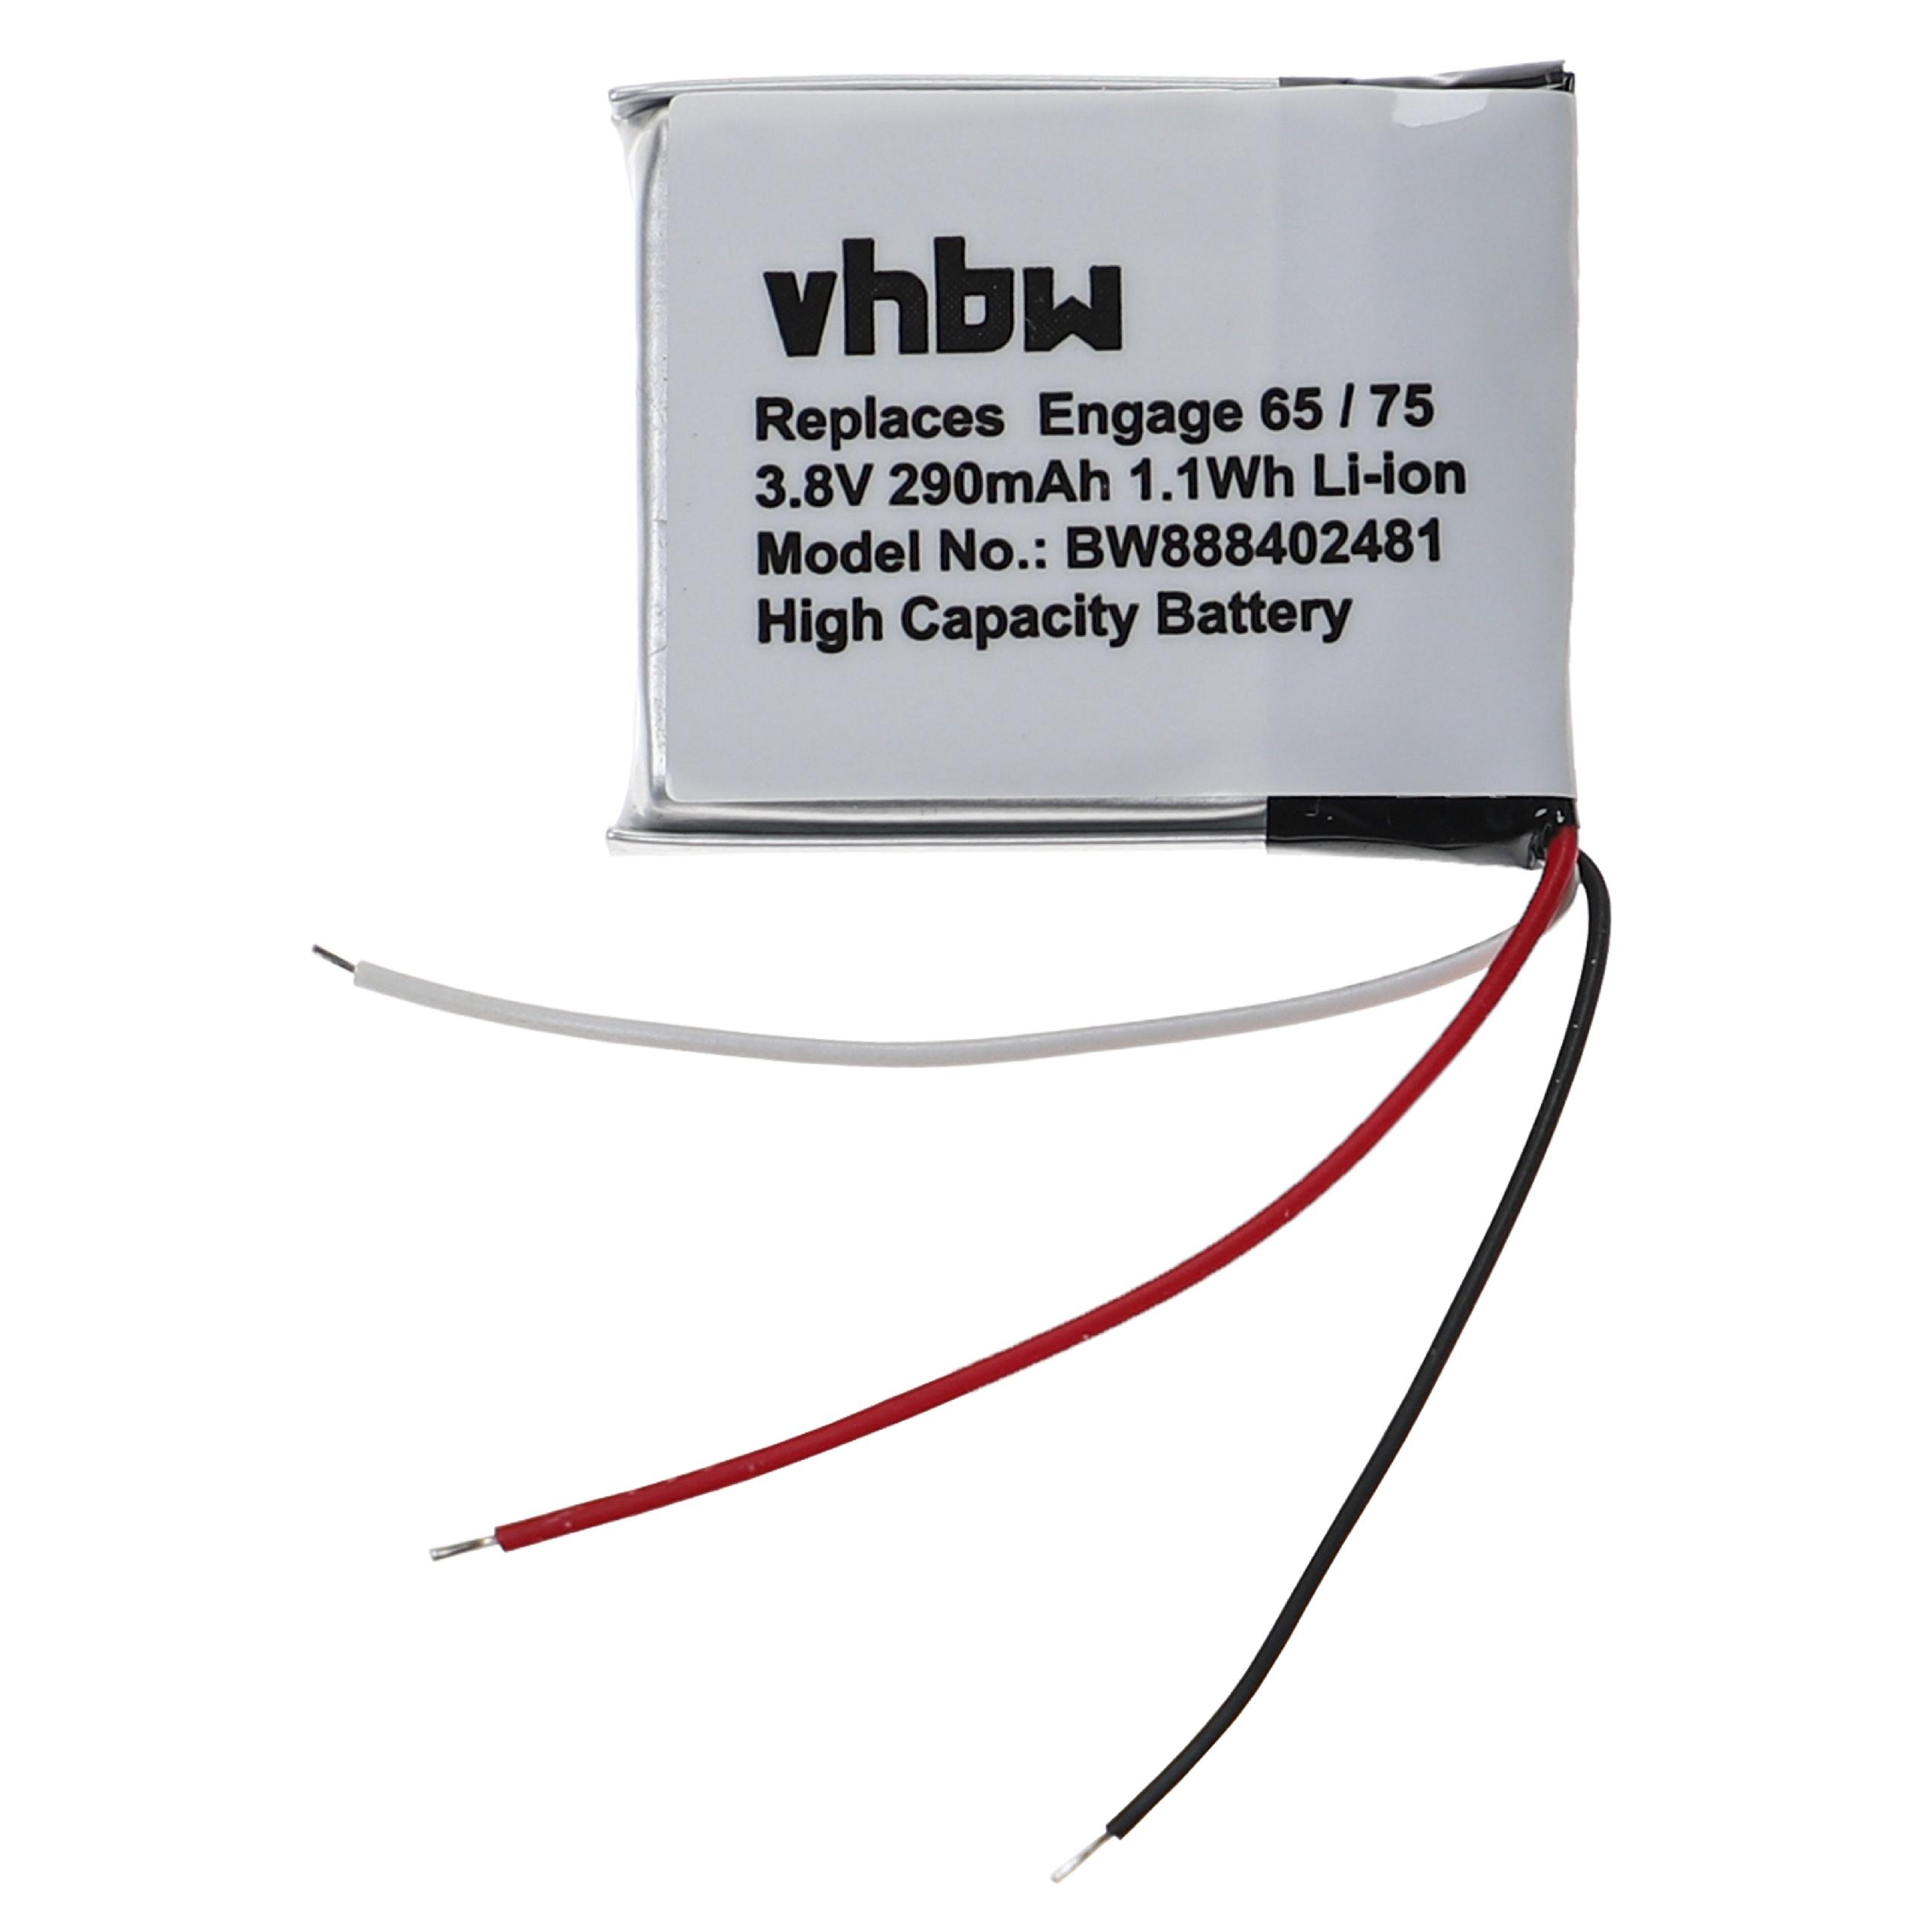 Wireless Headset Battery for Jabra Engage 65, 75 - 290mAh 3.8V Li-Ion